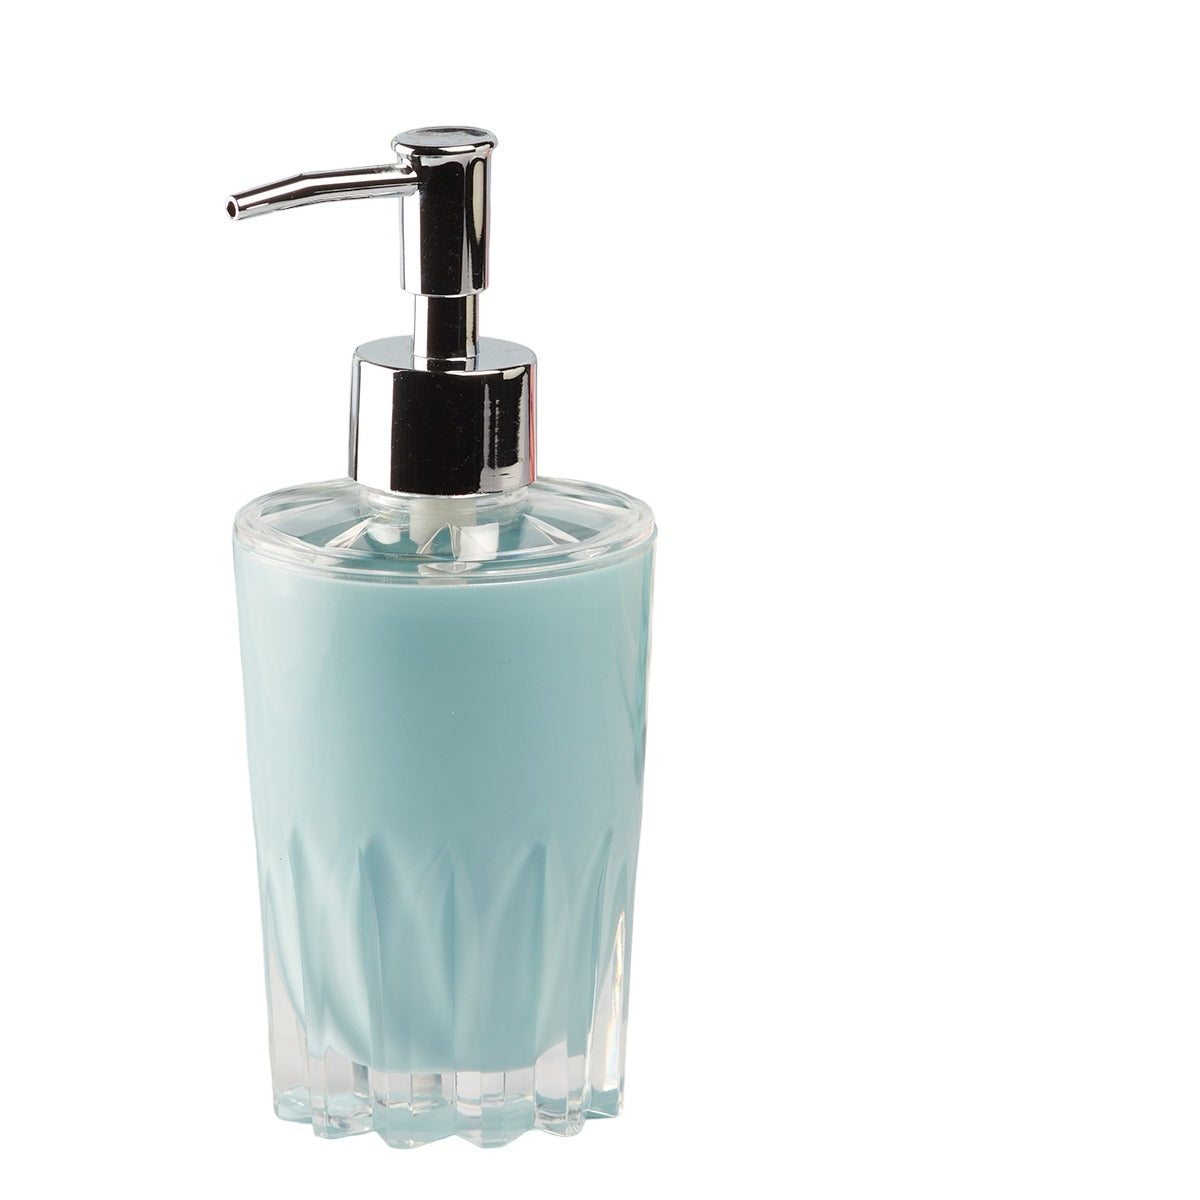 Acrylic Soap Dispenser Pump for Bathroom(8455)